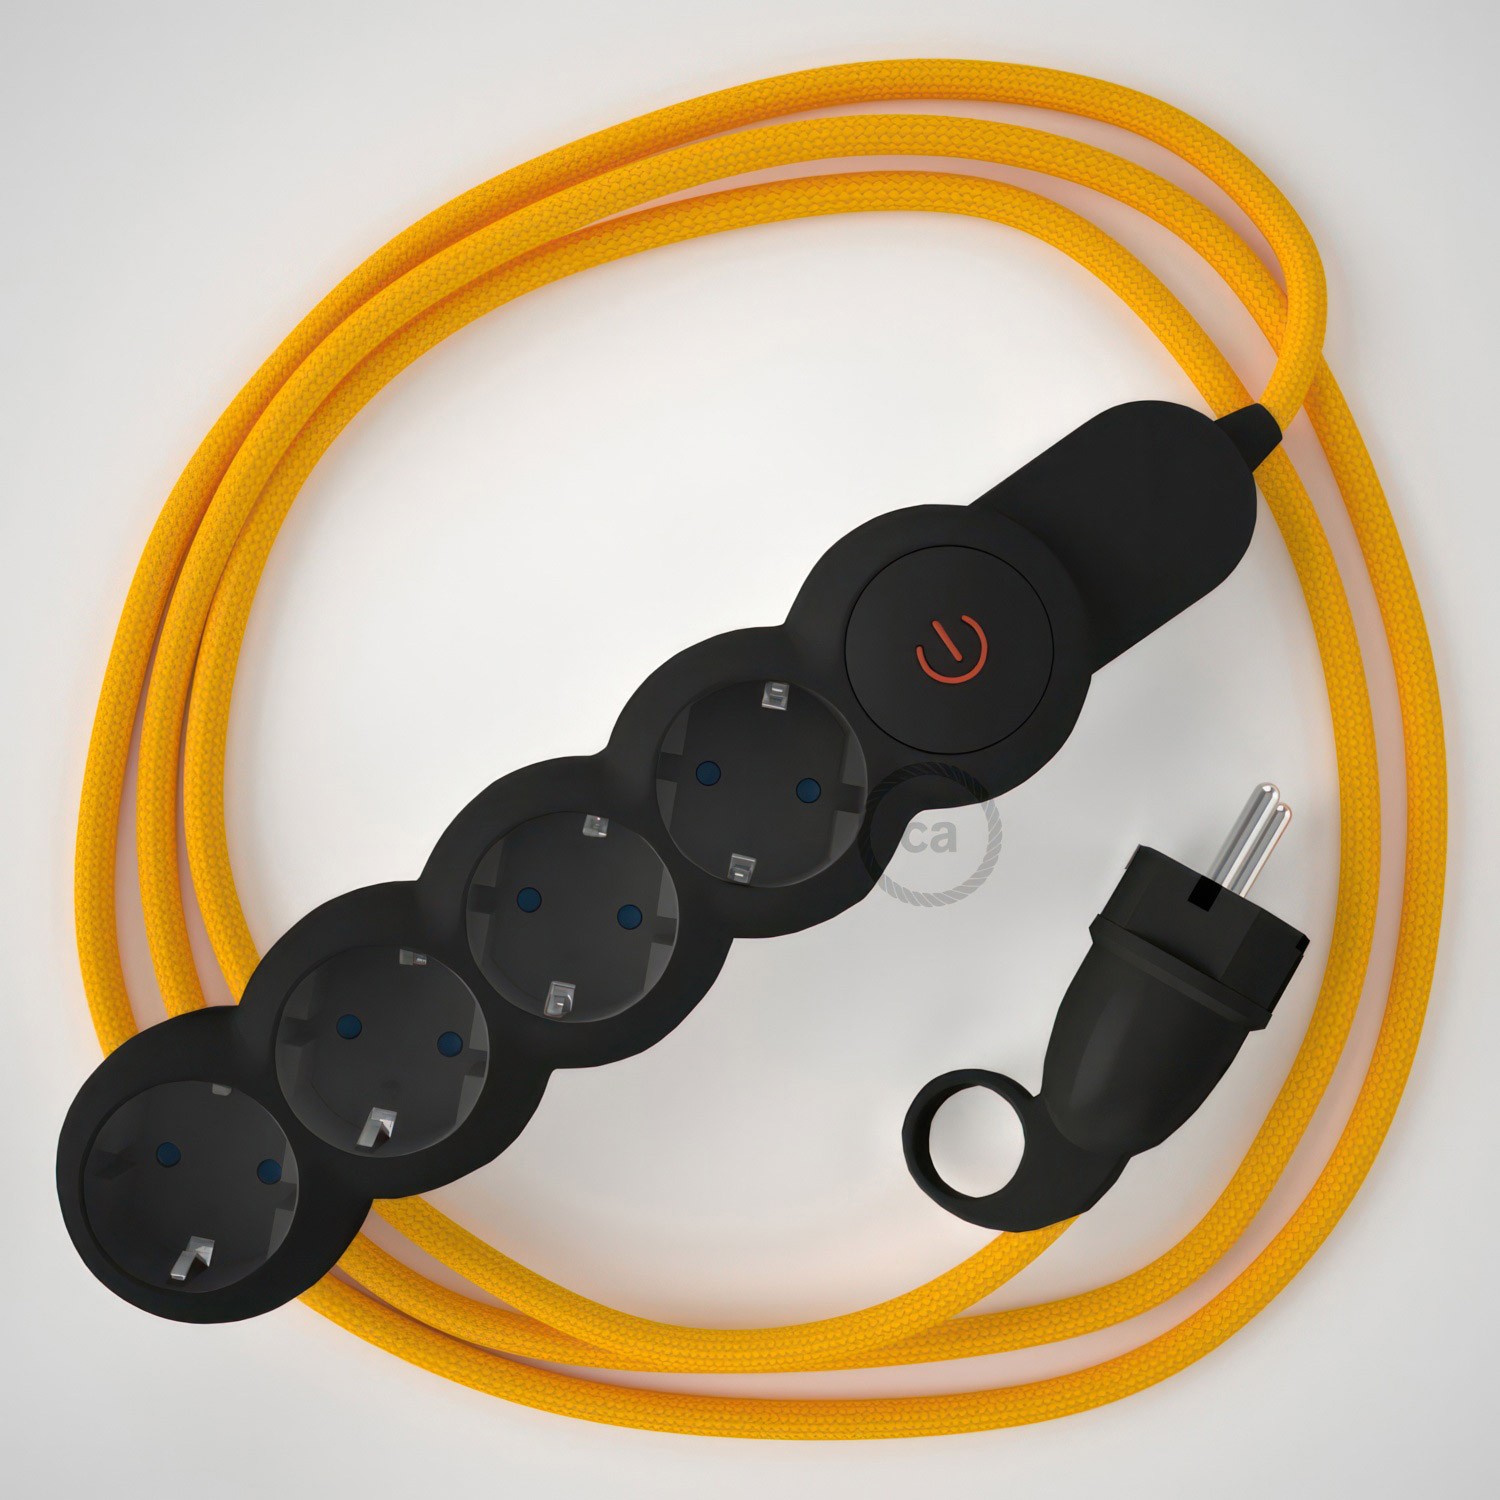 Razdjelnik s električnim tekstilnim kabelom Žuti RM10 i s udobnim šuko utikačem